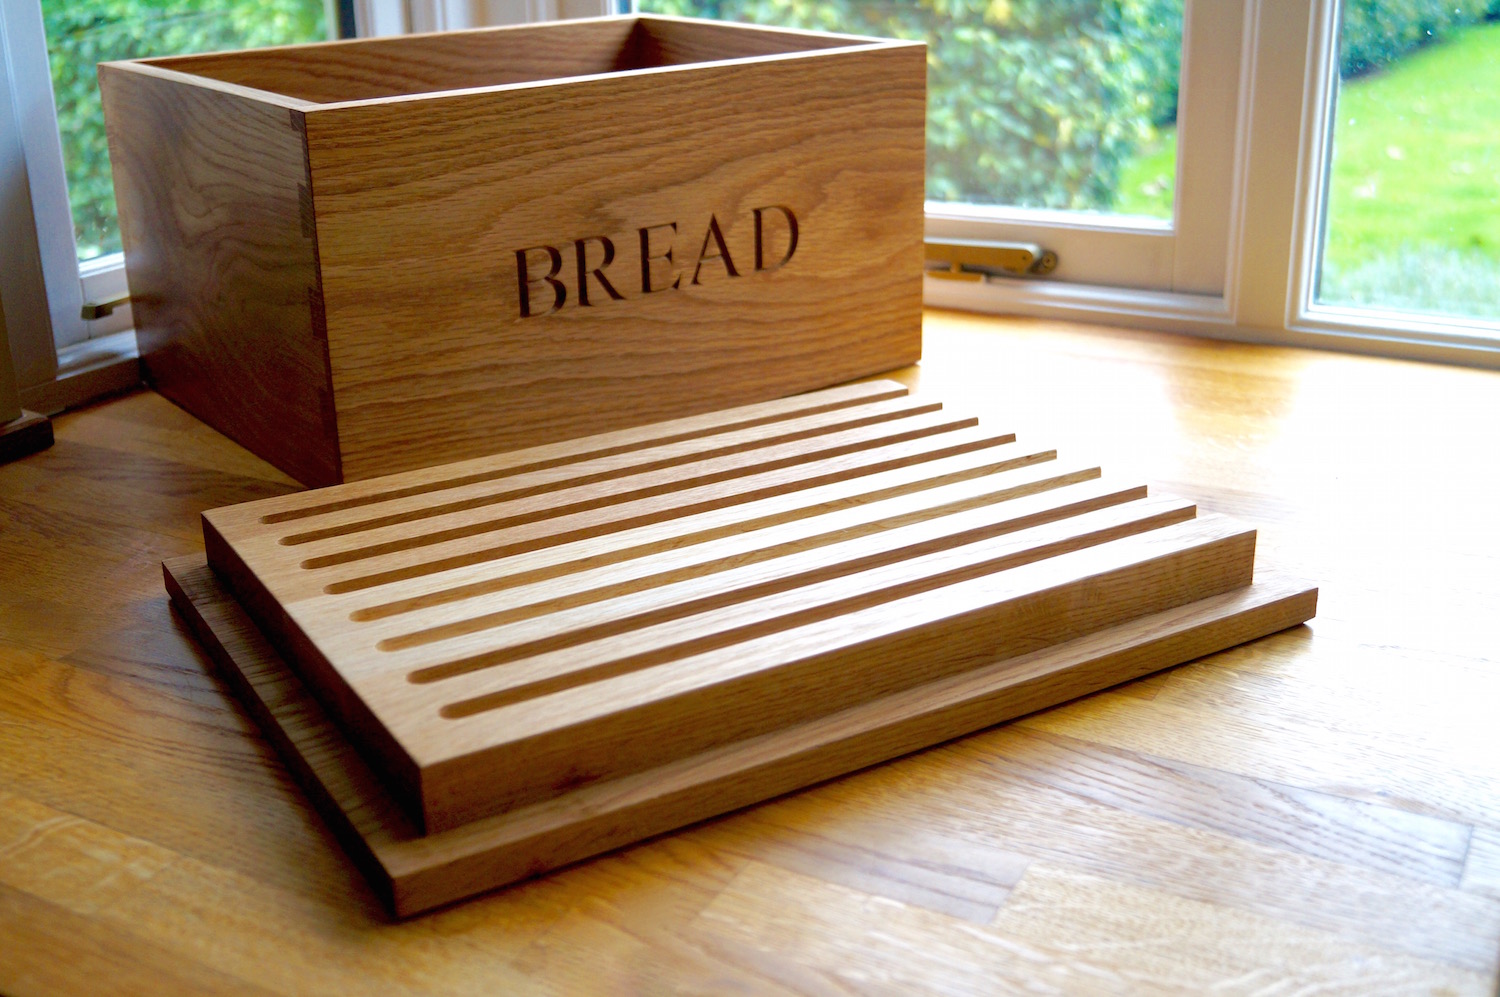 personalised-wooden-bread-bin-makemesomethingspecial-com